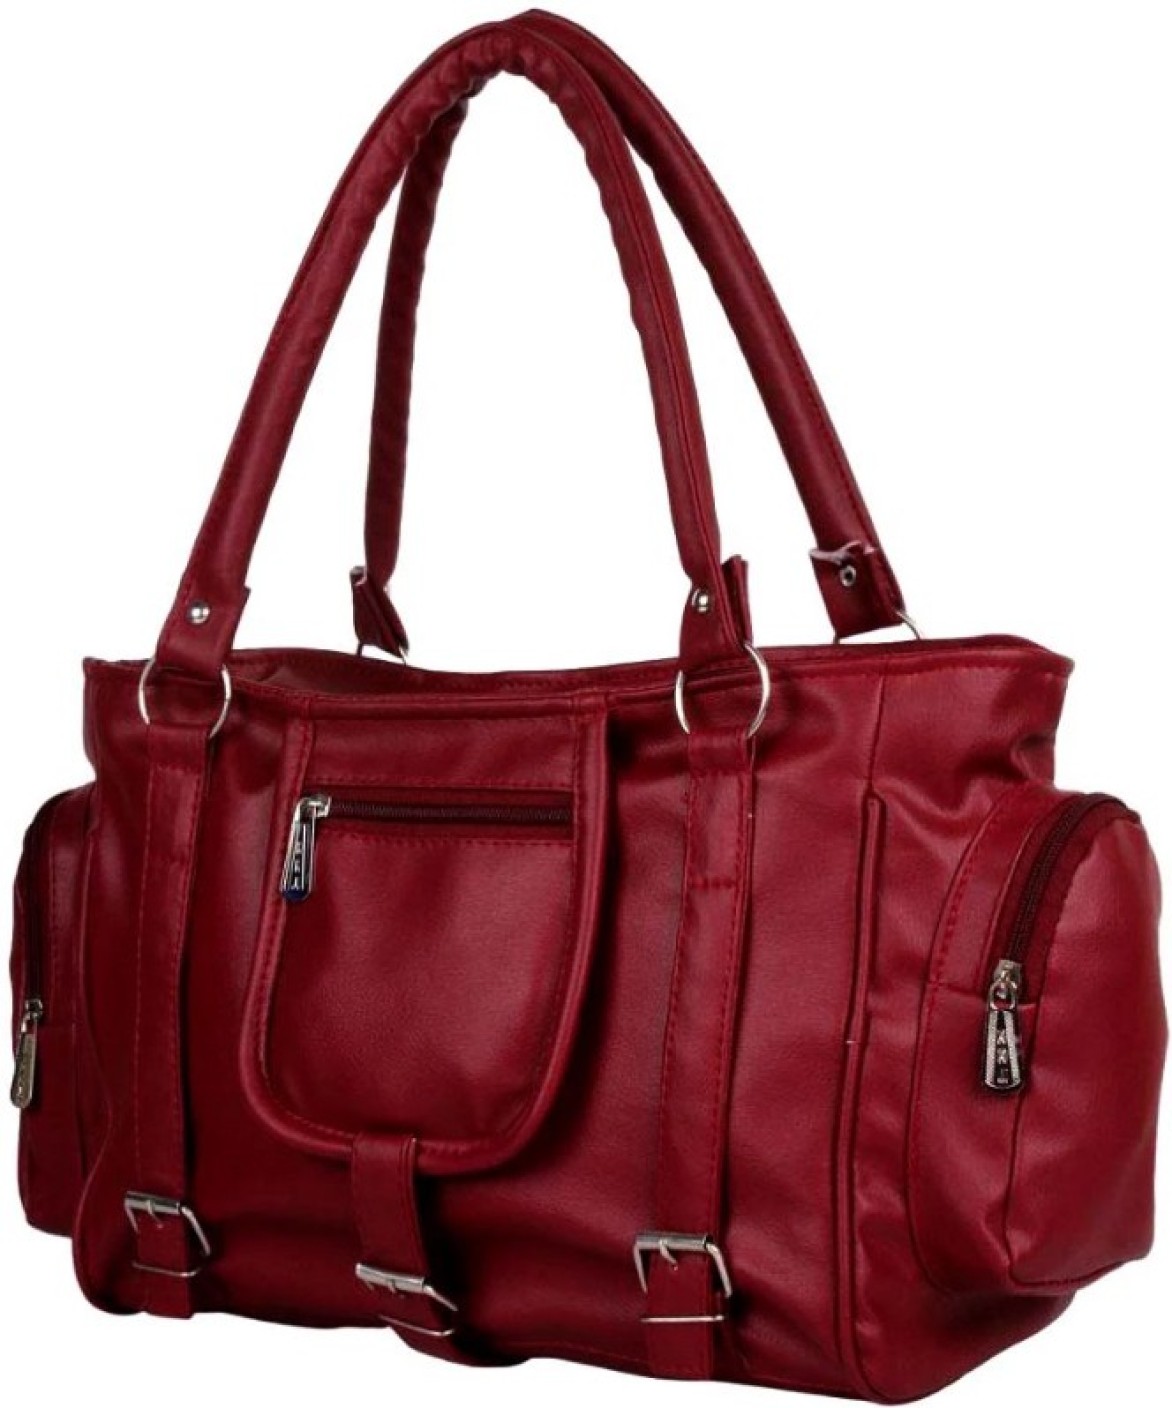 Buy MADASH Shoulder Bag maroon-61 Online @ Best Price in India | 0